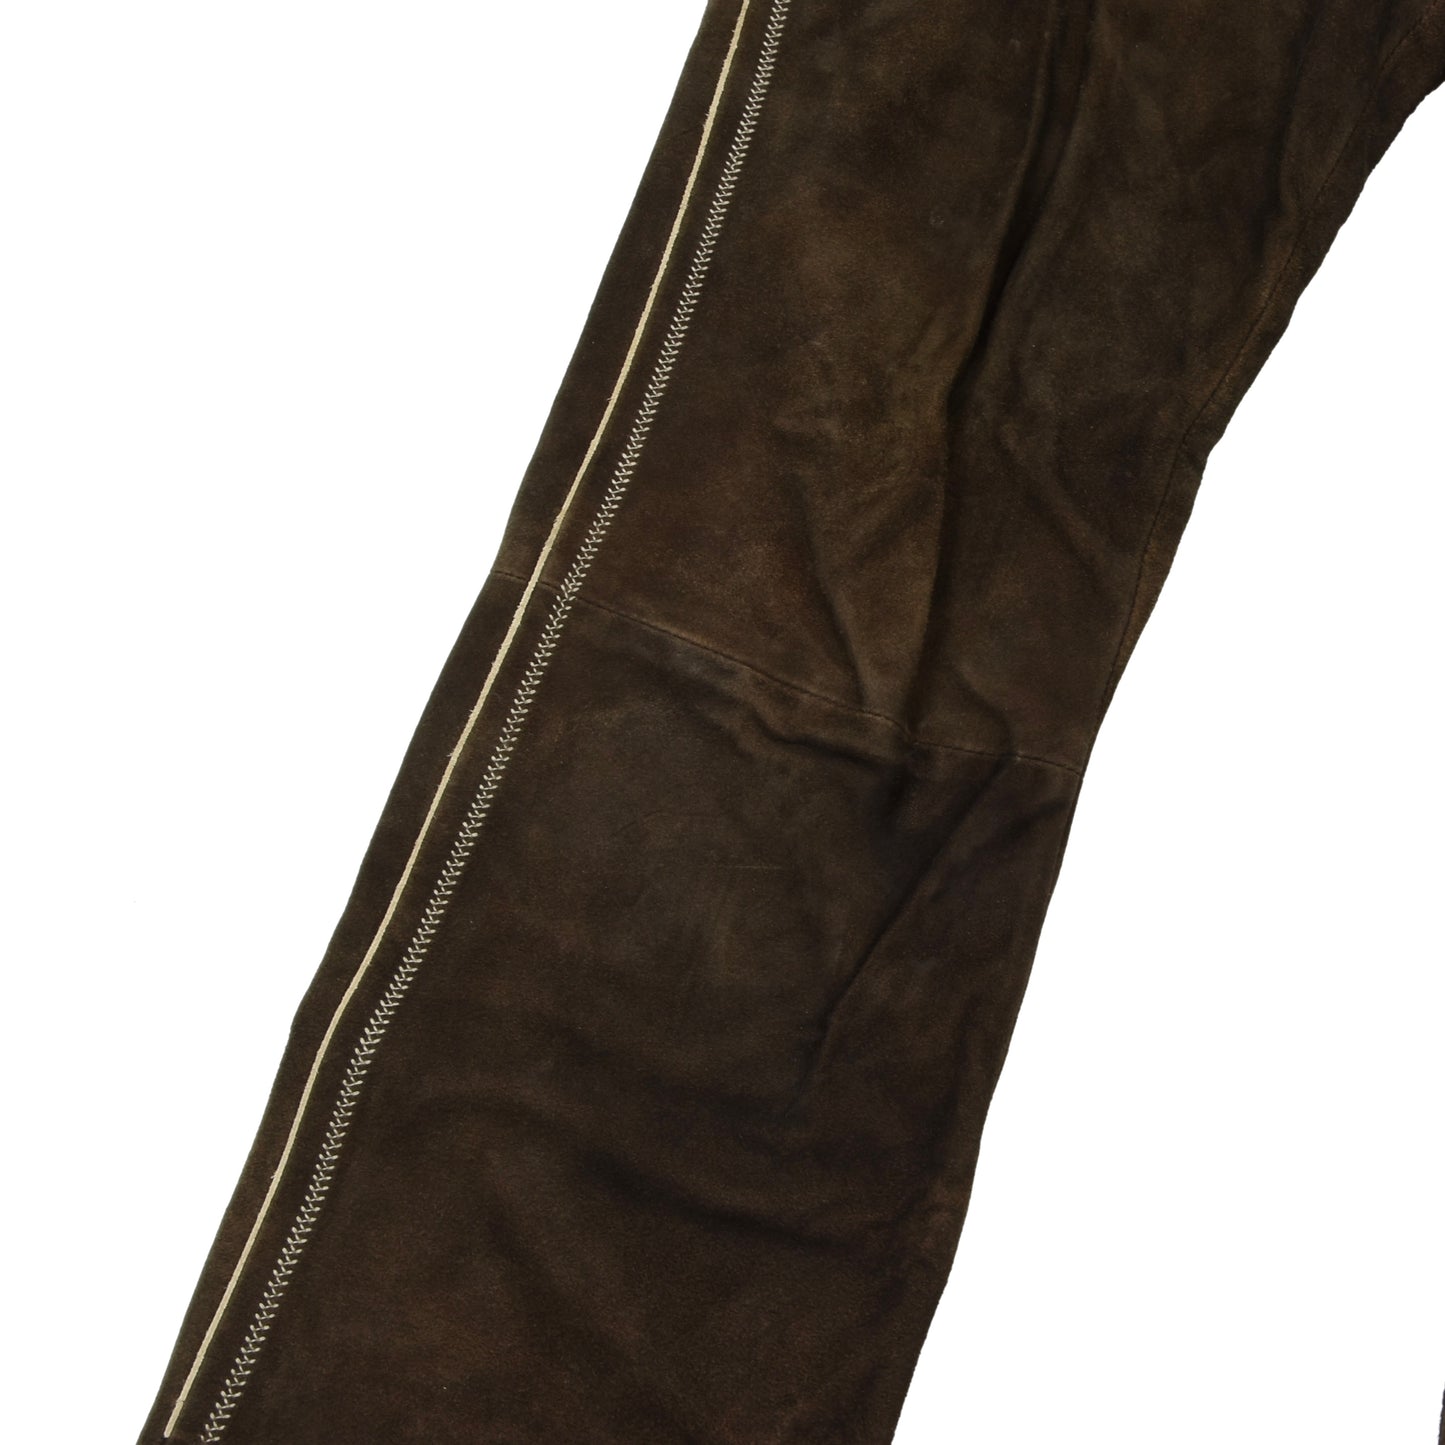 Spieth & Wensky Wild Bock Suede Lederhose/Pants Size 50 - Brown